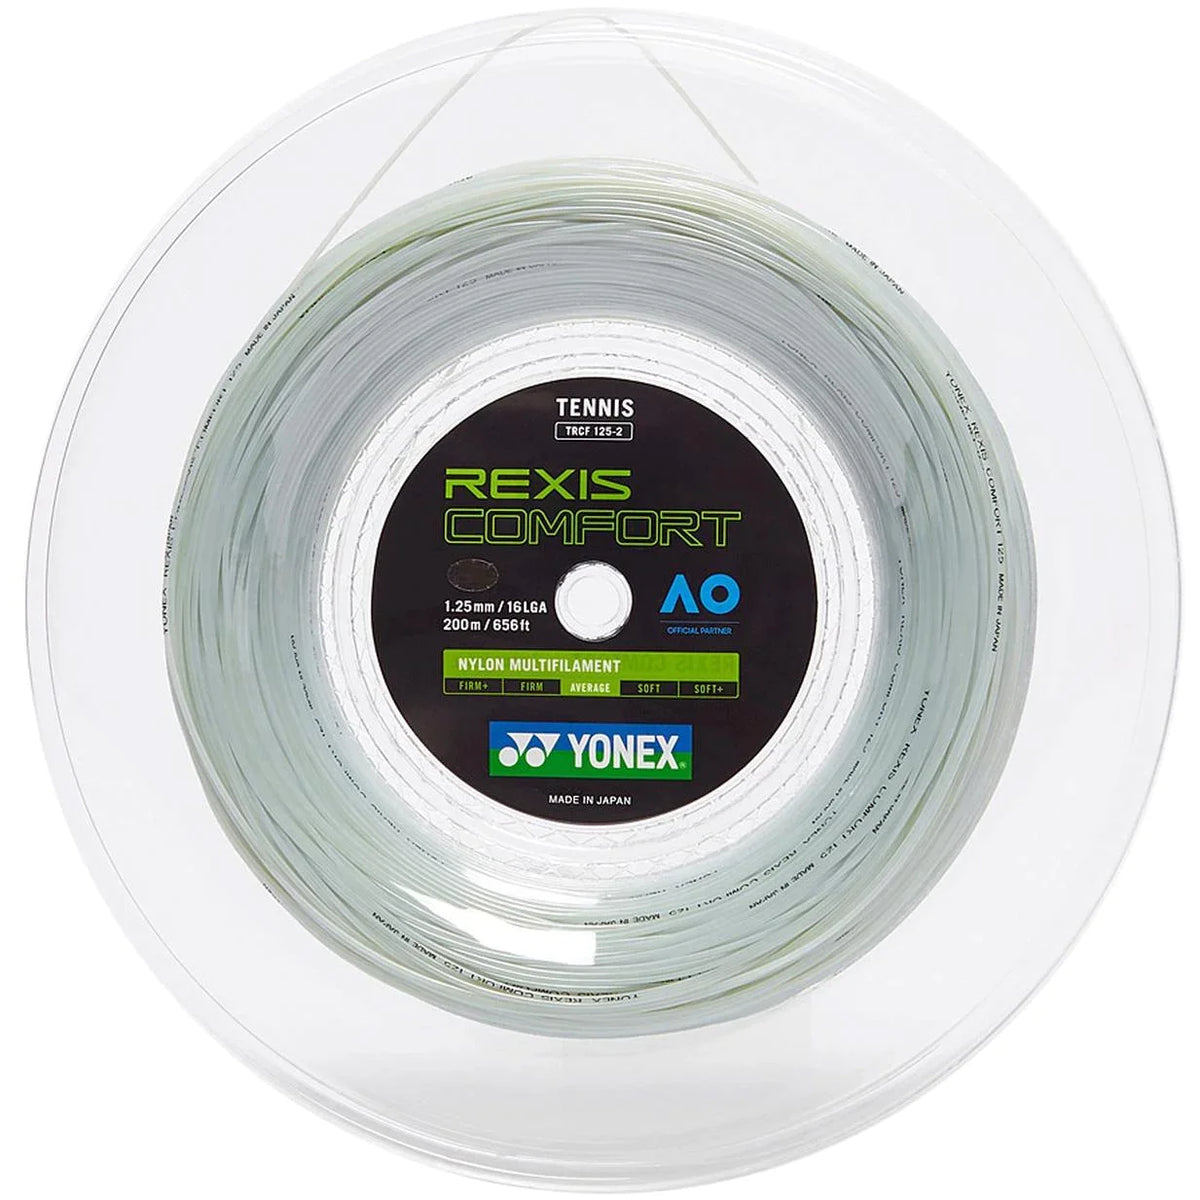 Yonex Rexis Comfort 1.25 毫米 200 米卷轴网球线冷白色